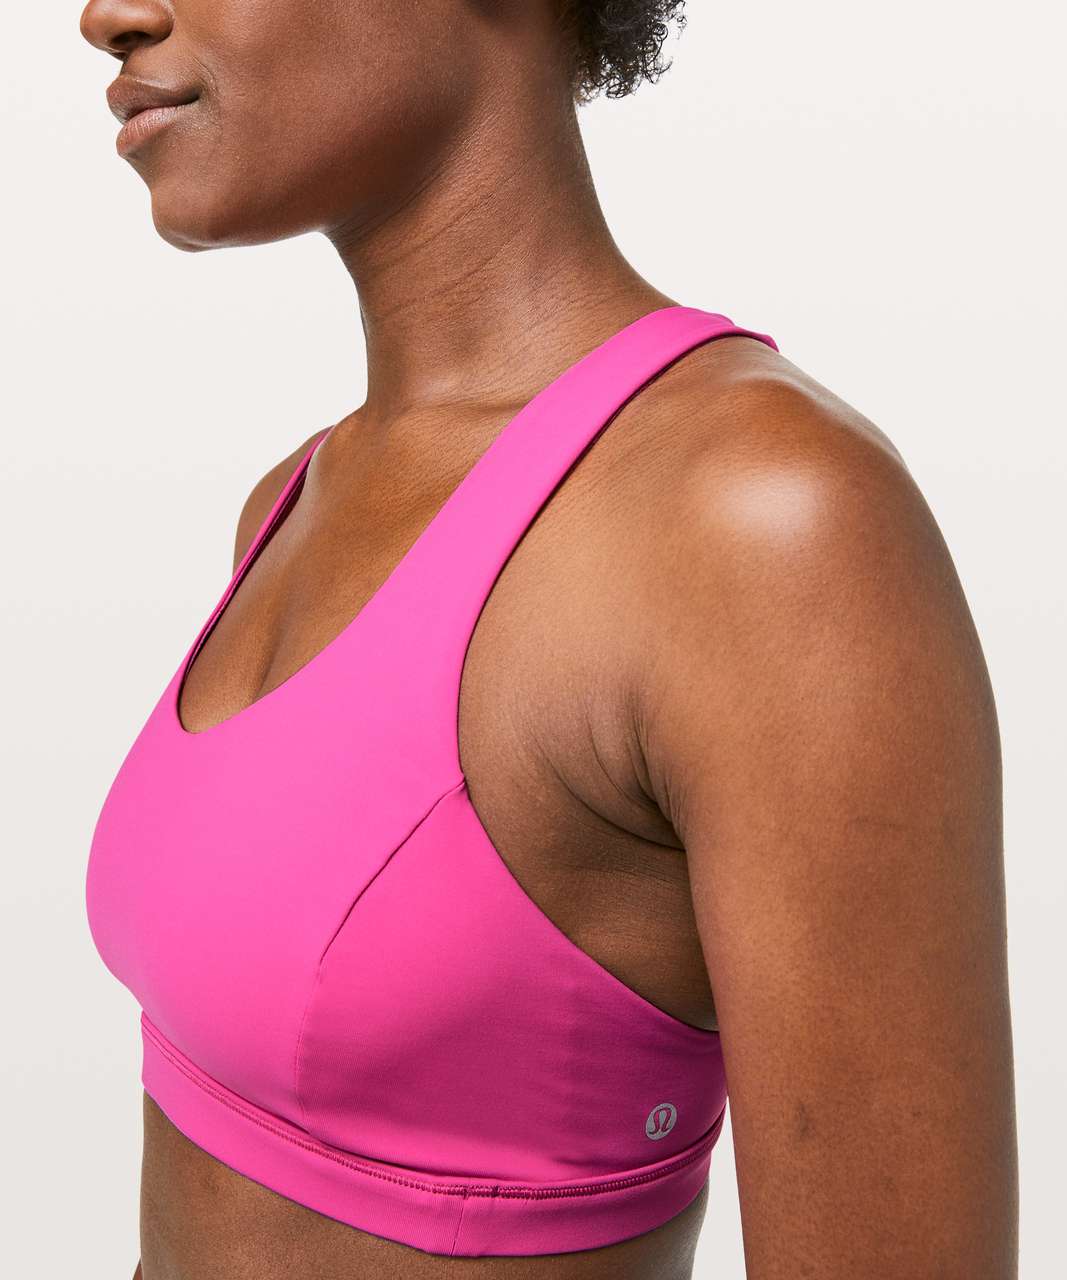 Lululemon sonic pink energy bra Size M - $43 (52% Off Retail